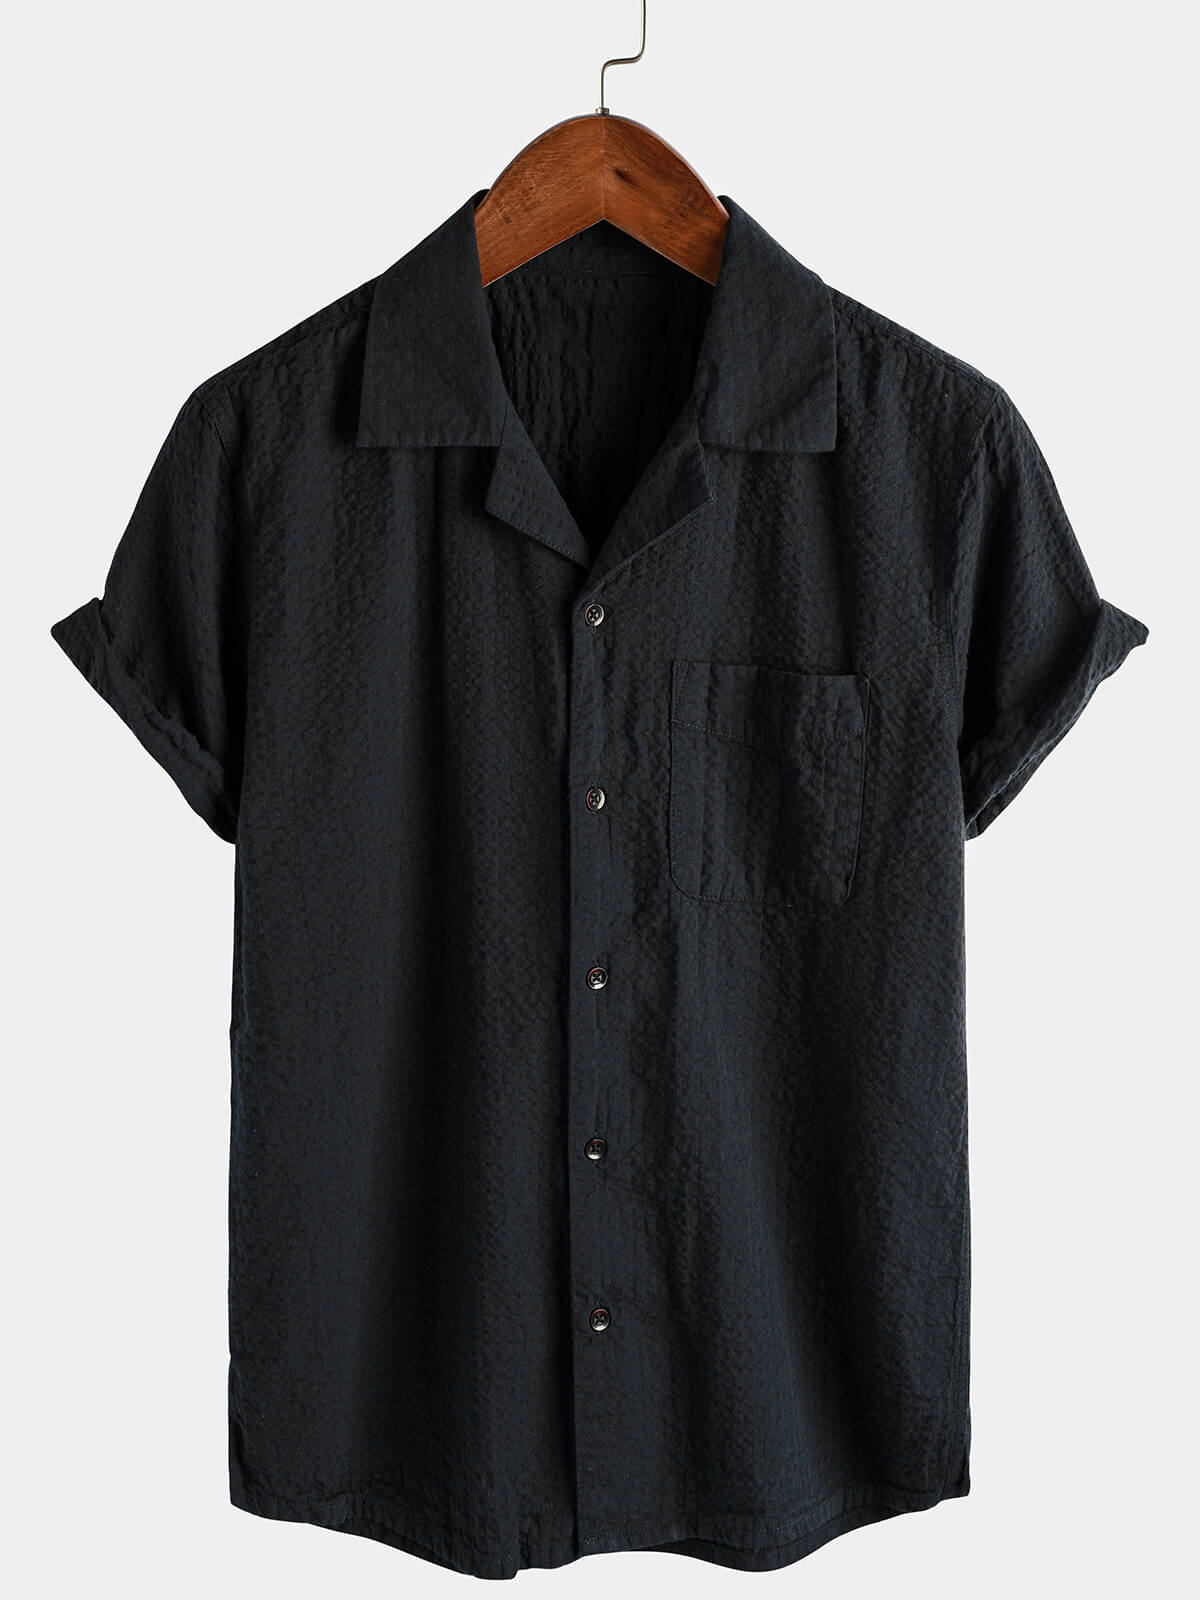 Men's Cotton Pocket Casual Solid Color Beach Summer Button Up Short Sleeve Shirt